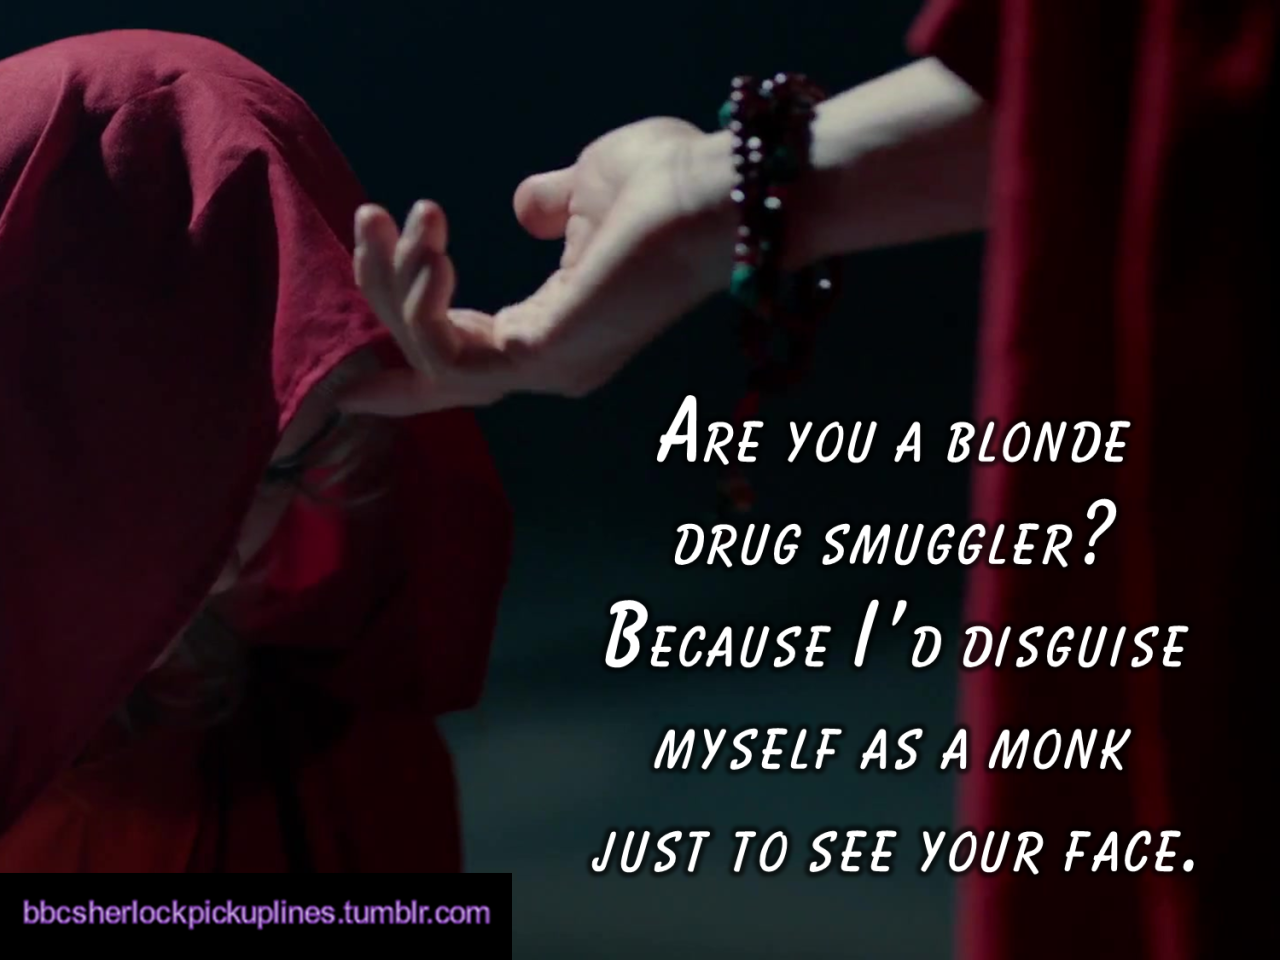 â€œAre you a blonde drug smuggler? Because Iâ€™d disguise myself as a monk